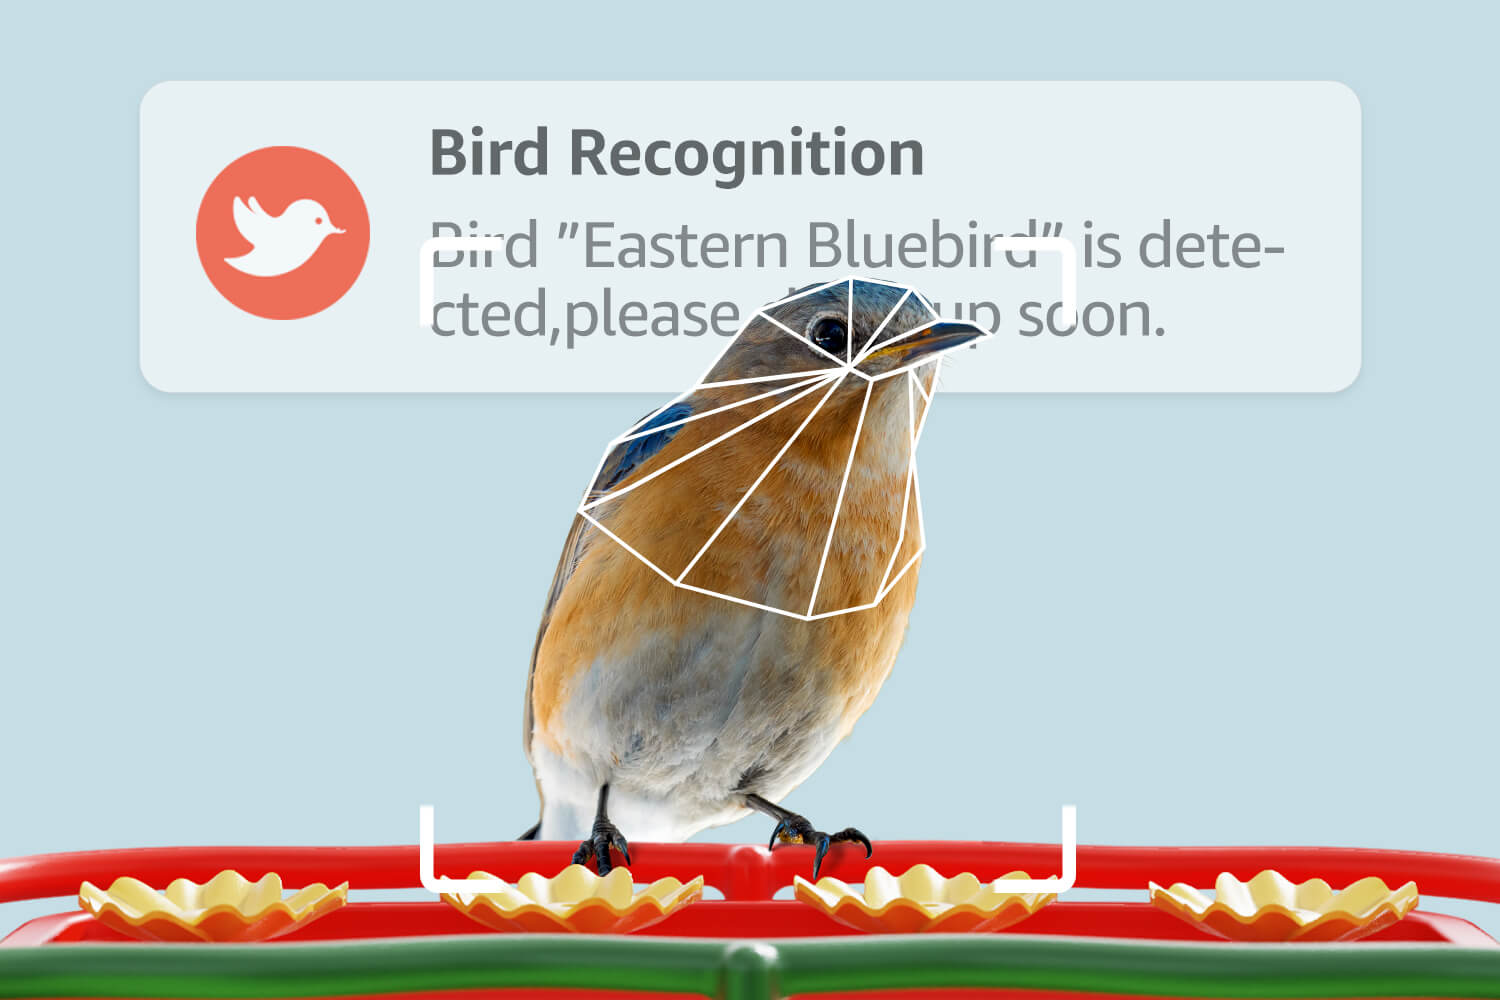 BirdHi Ultra, Free and professional AI bird recognition, Have fun exploring your local wild birds!